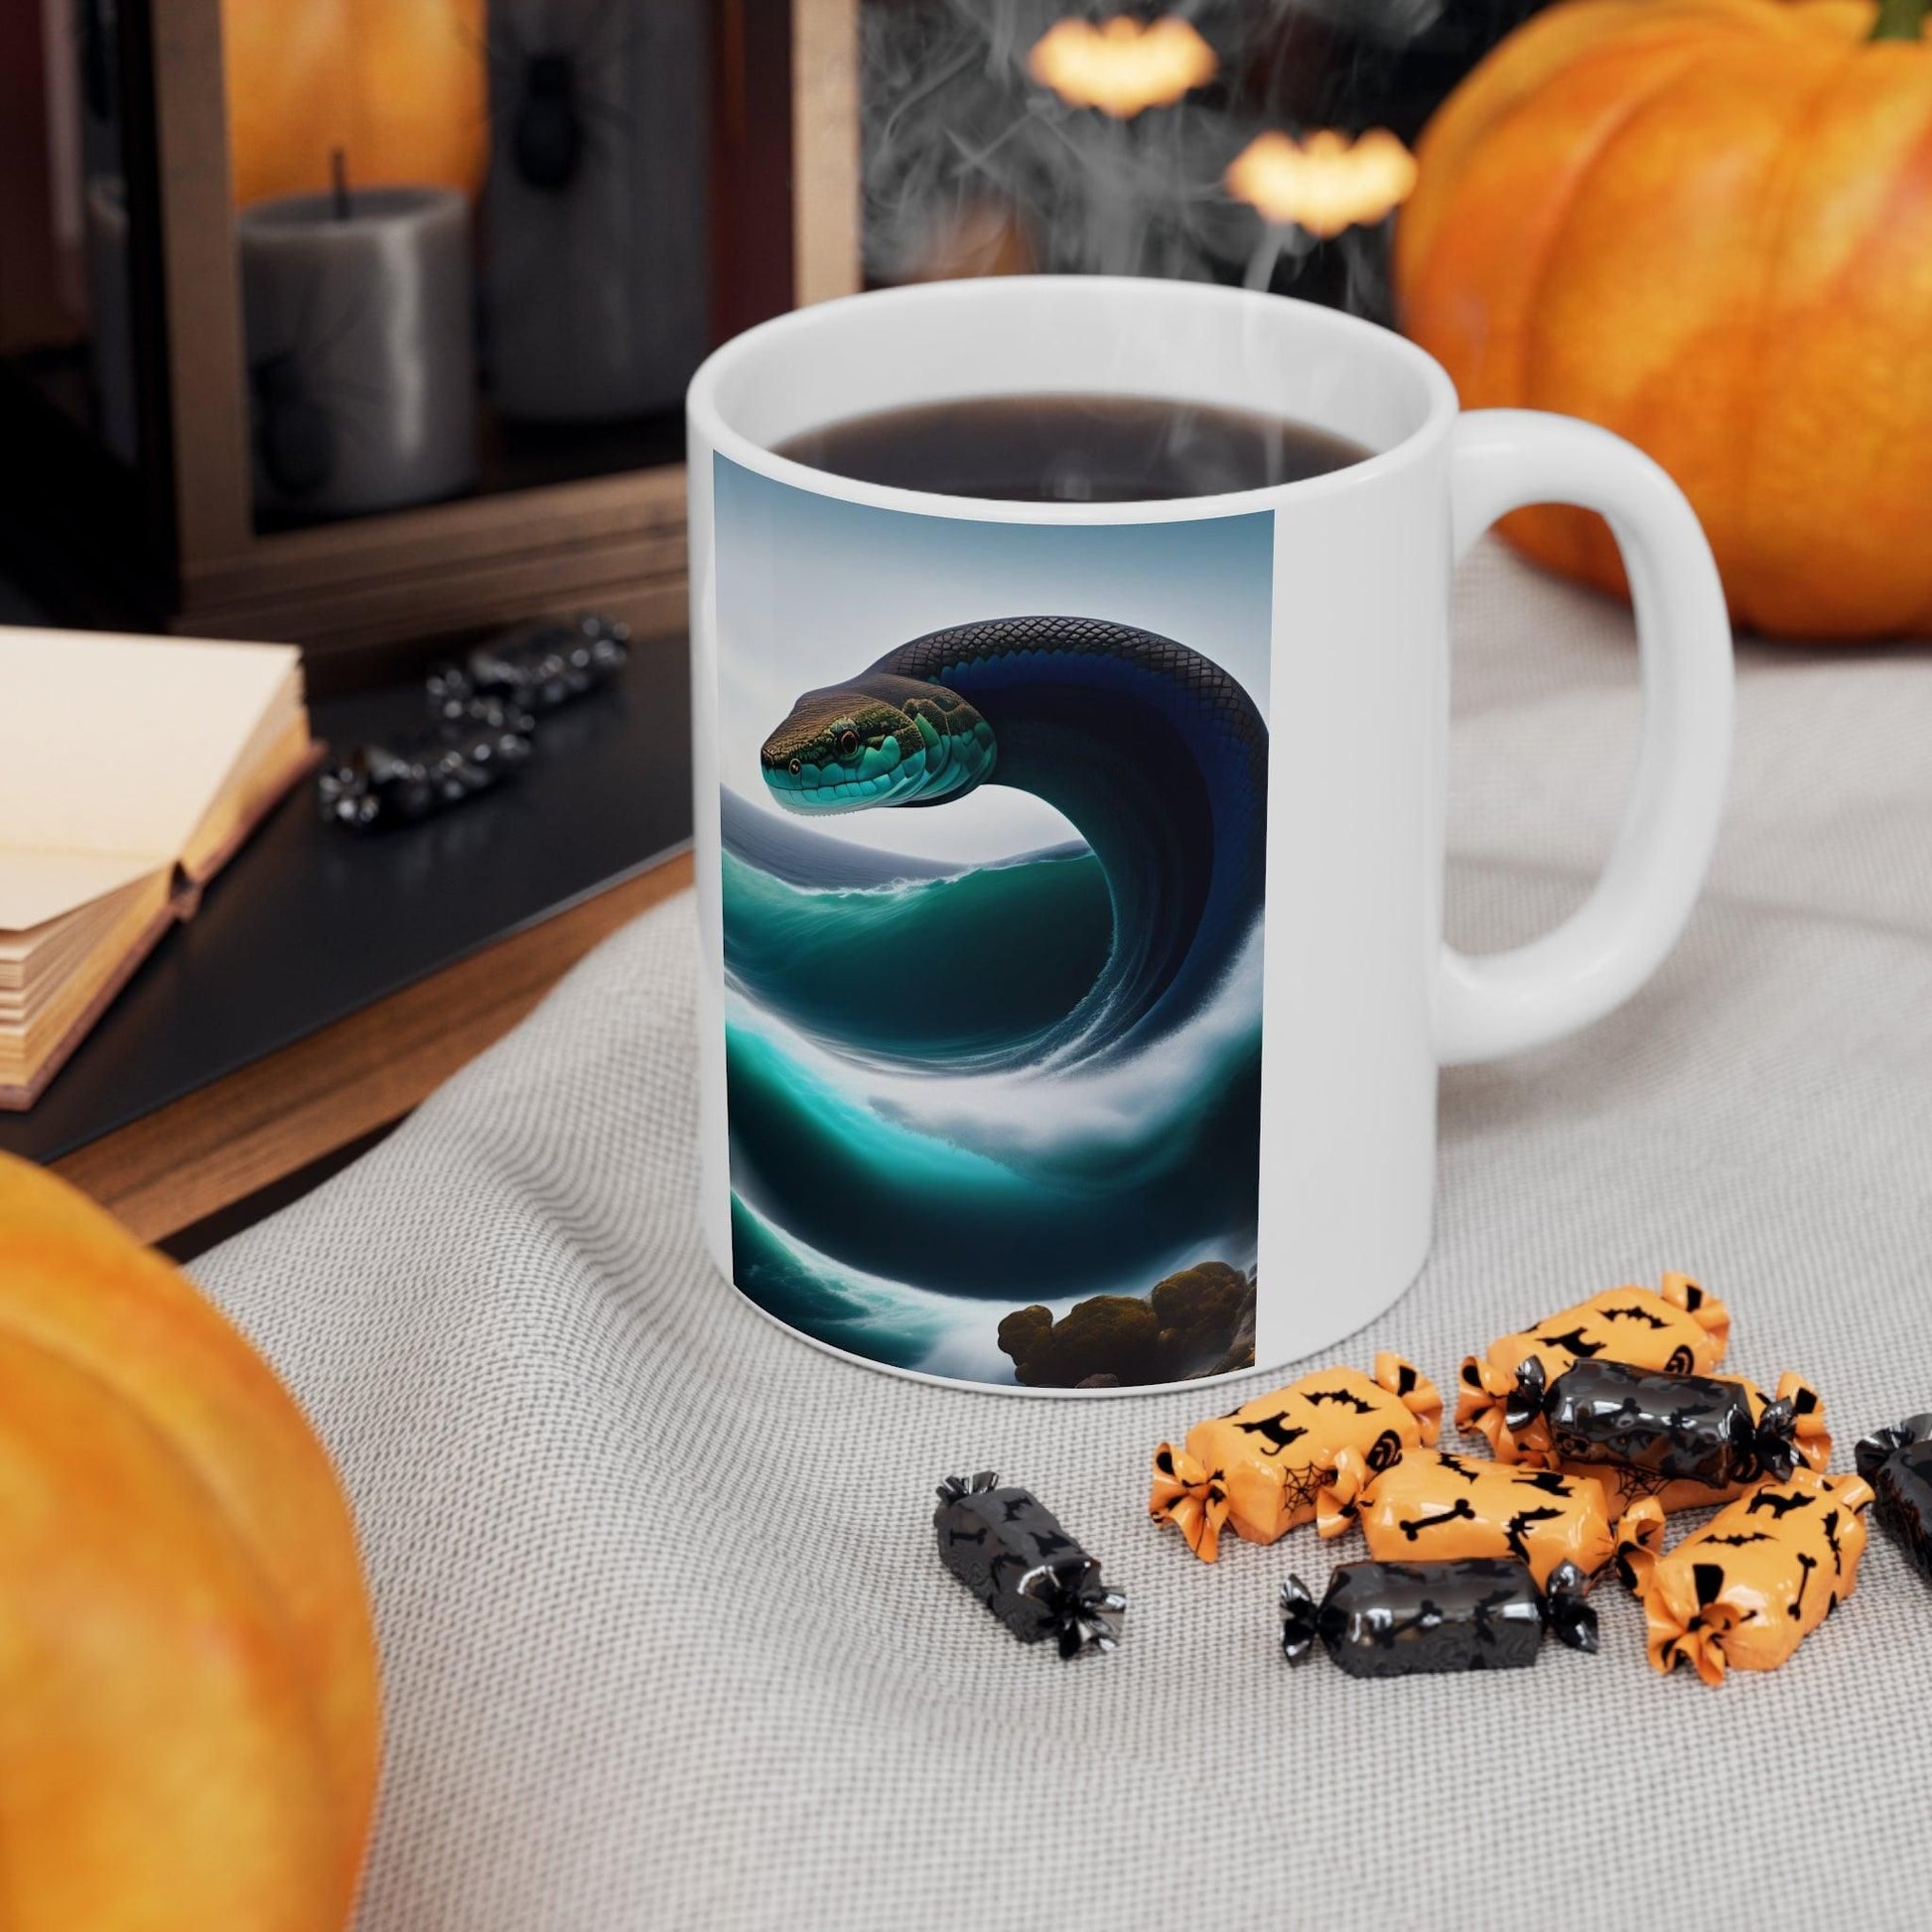 Serpent from Sea reaching to sky Ceramic Coffee Cups, 11oz, 15oz (UK/Ireland) - e-mandi